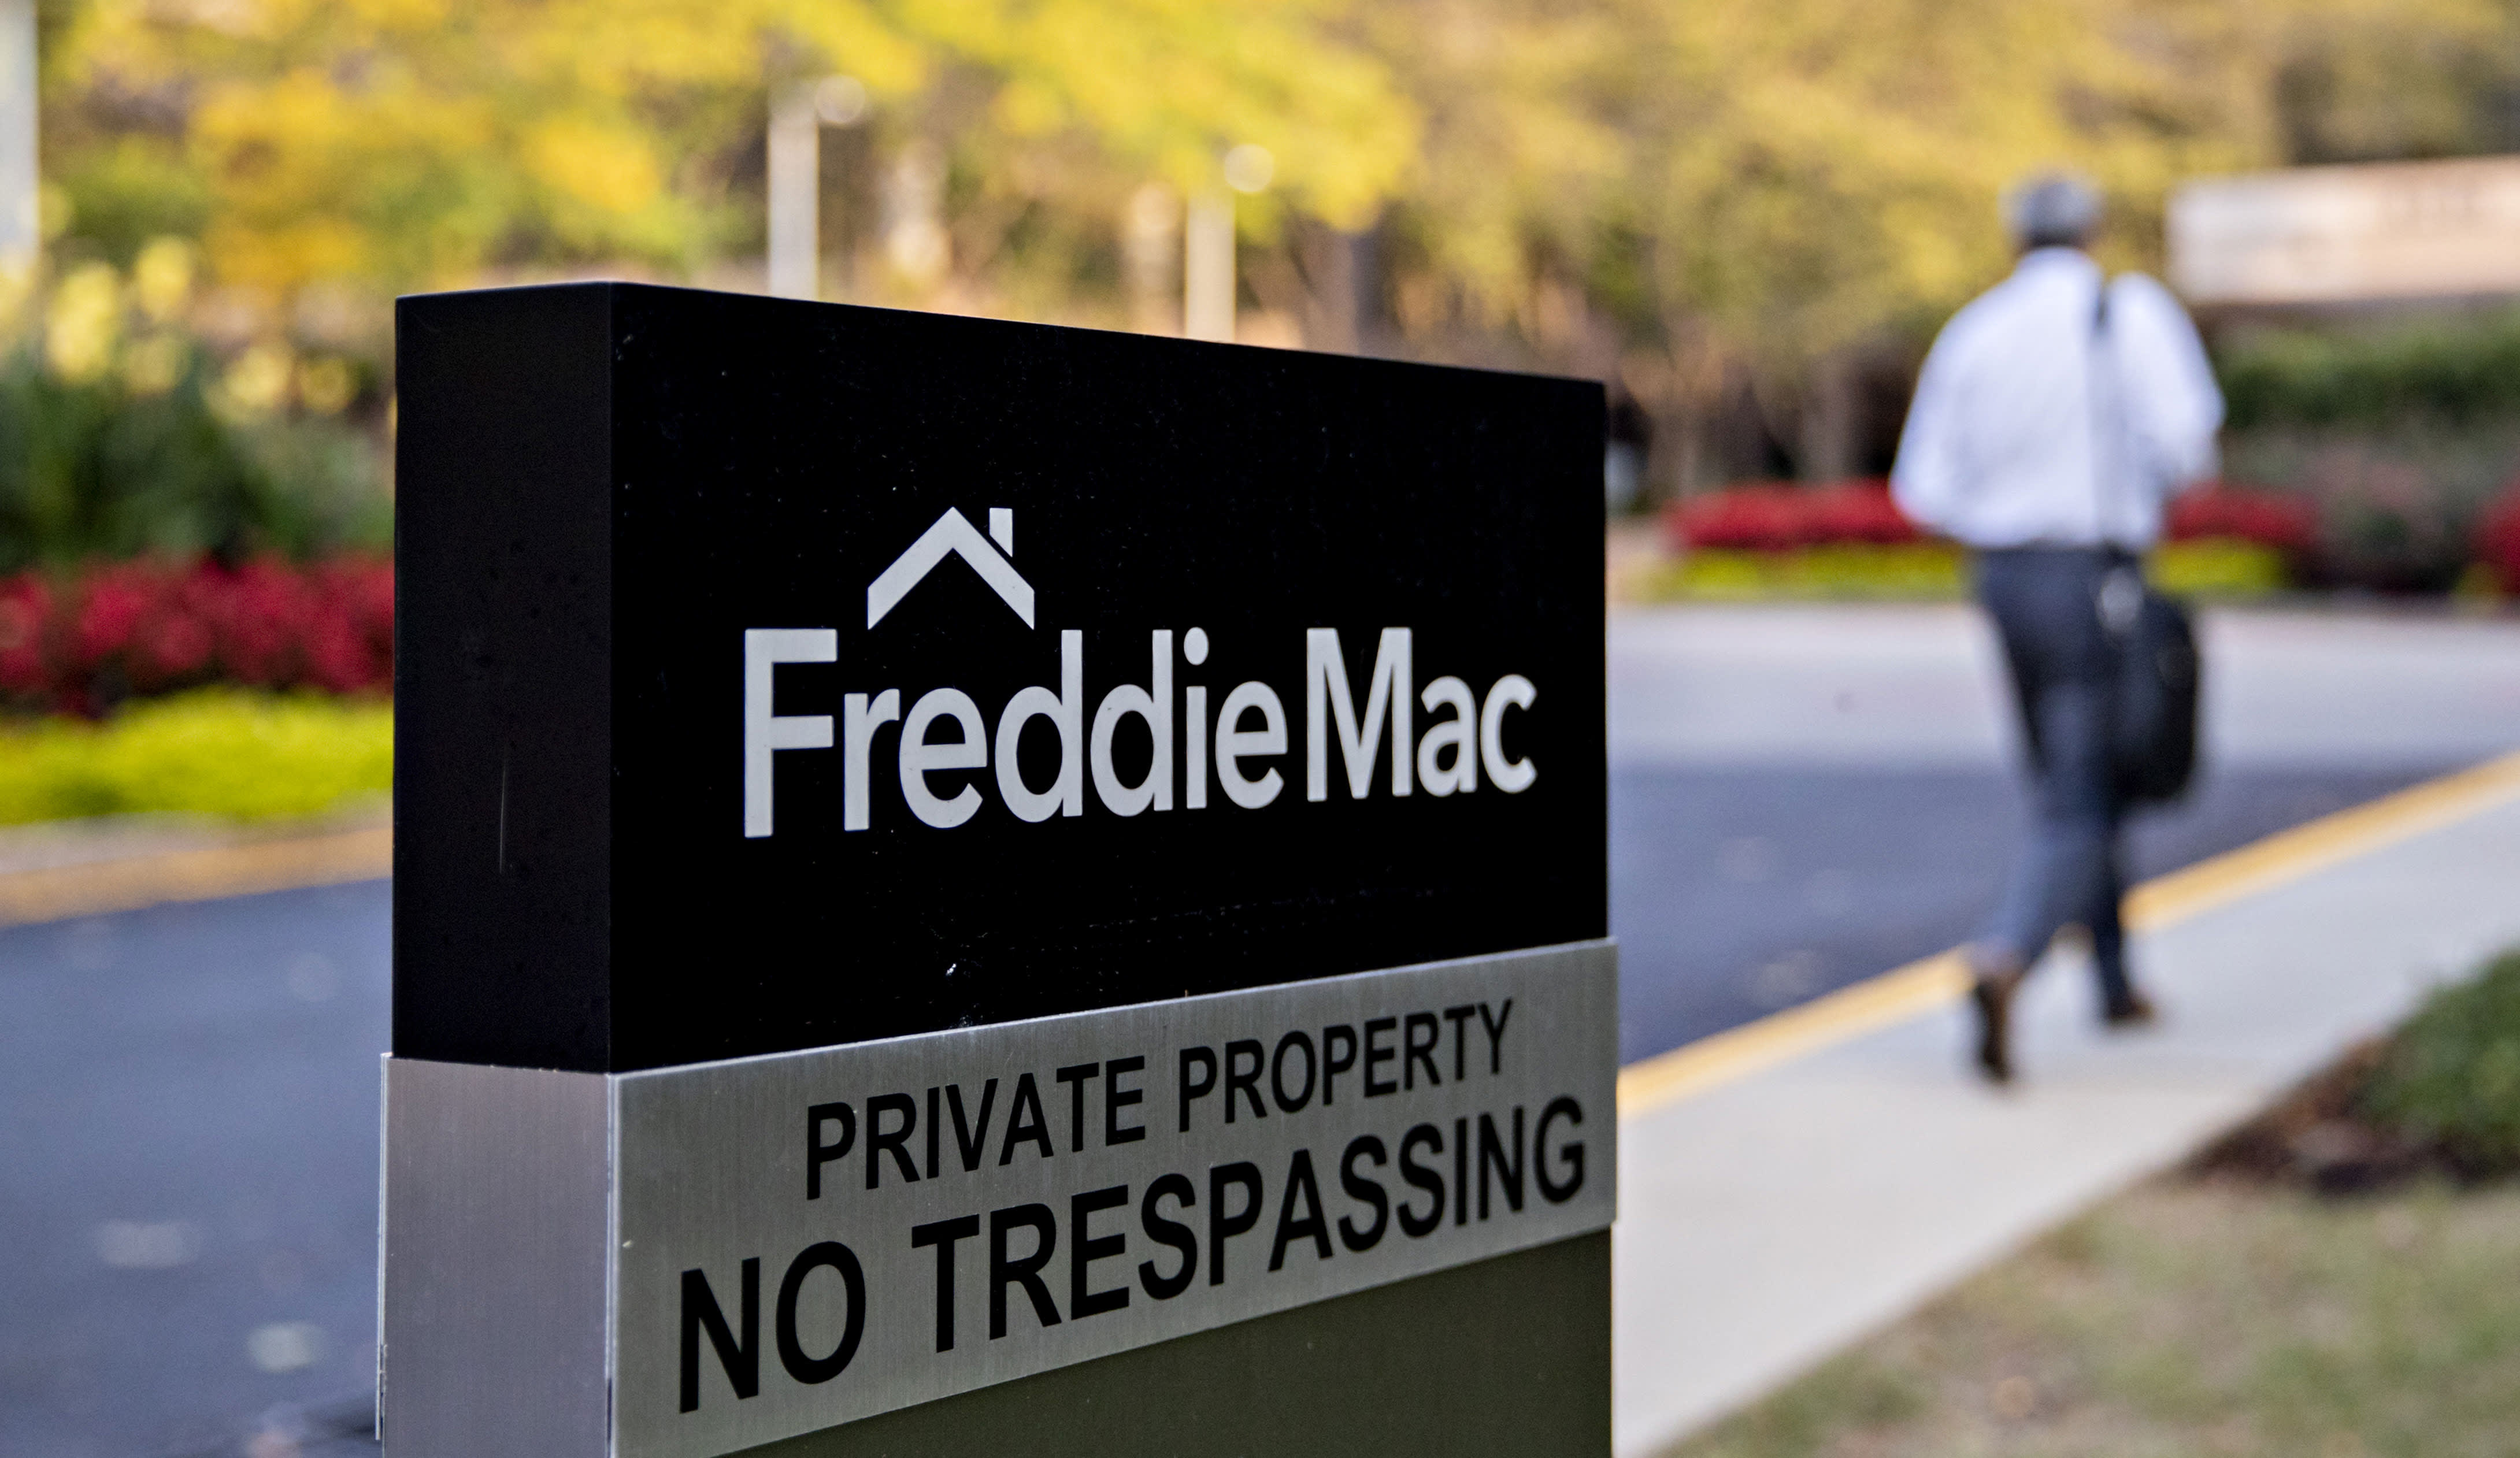 freddie mac programs for refinance